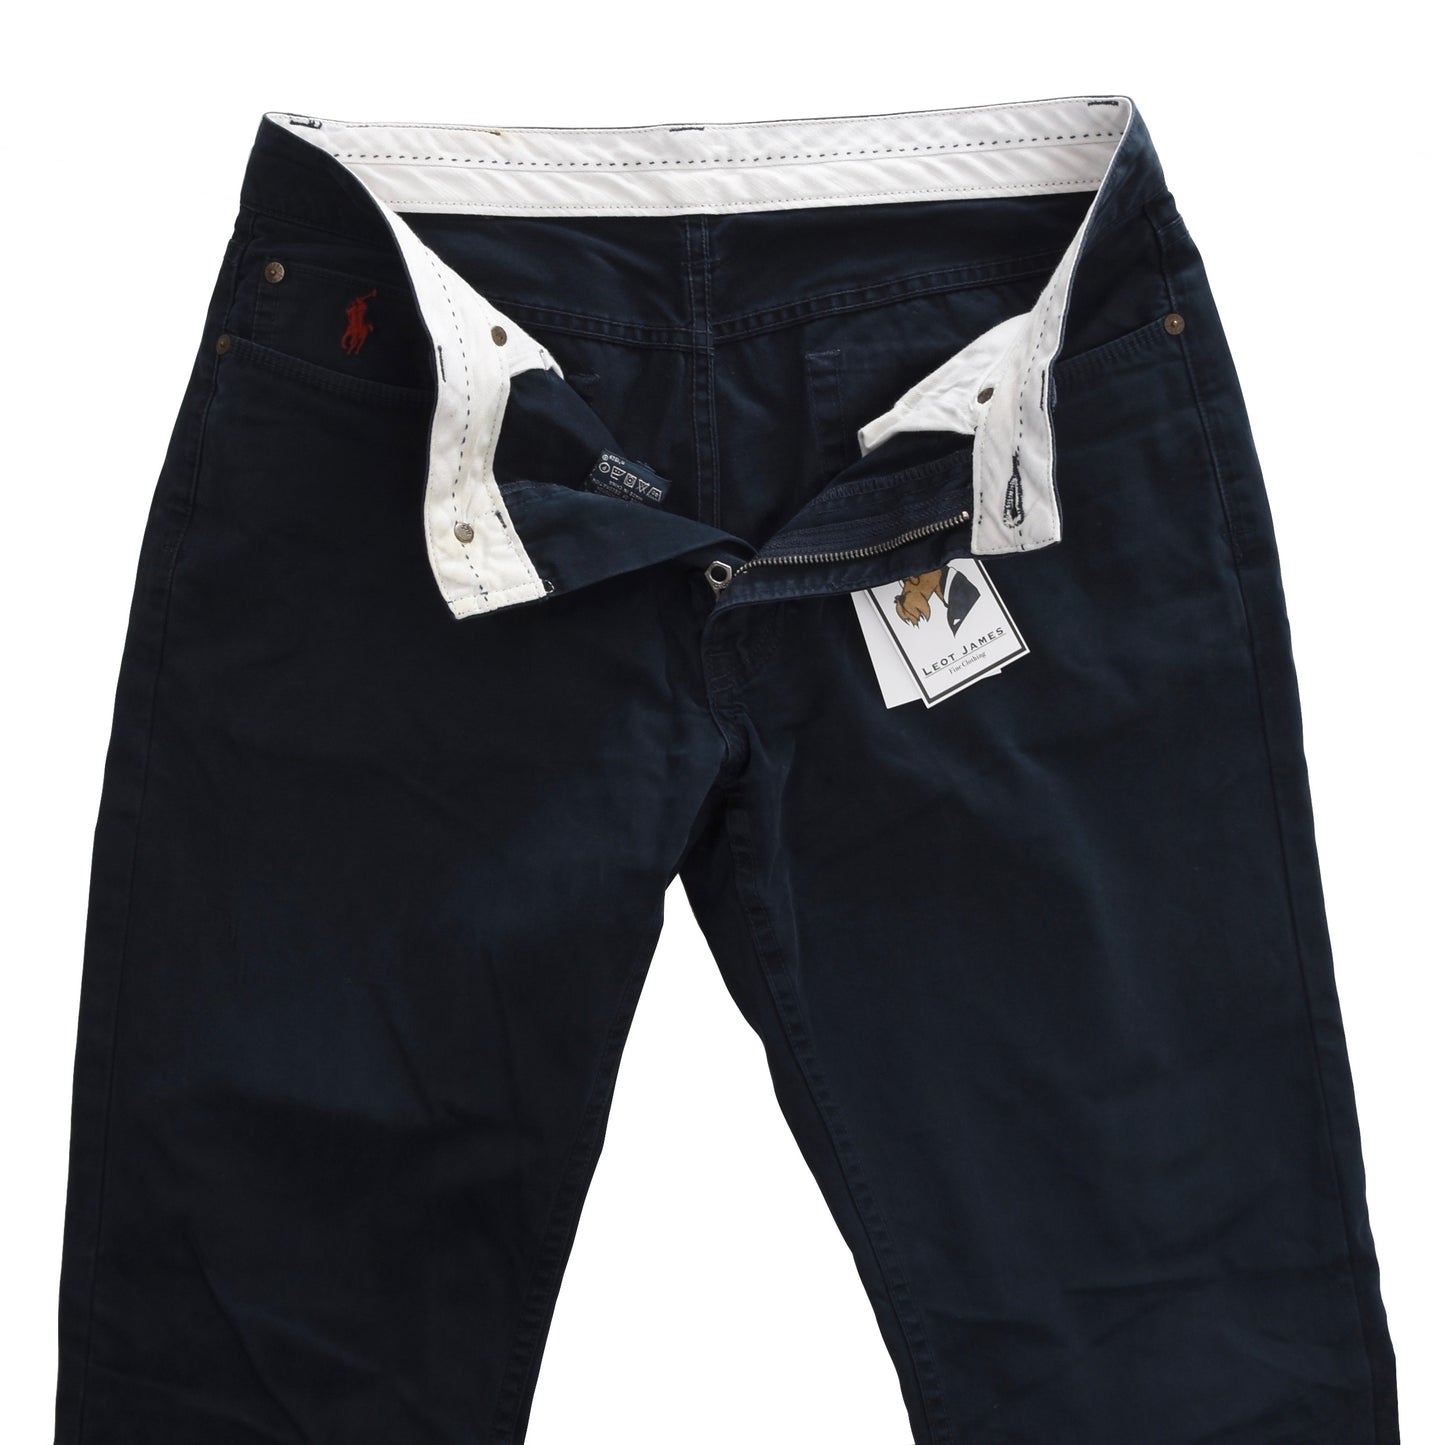 Polo Ralph Lauren Dungarees/Pants Size 32/32 - Navy Blue